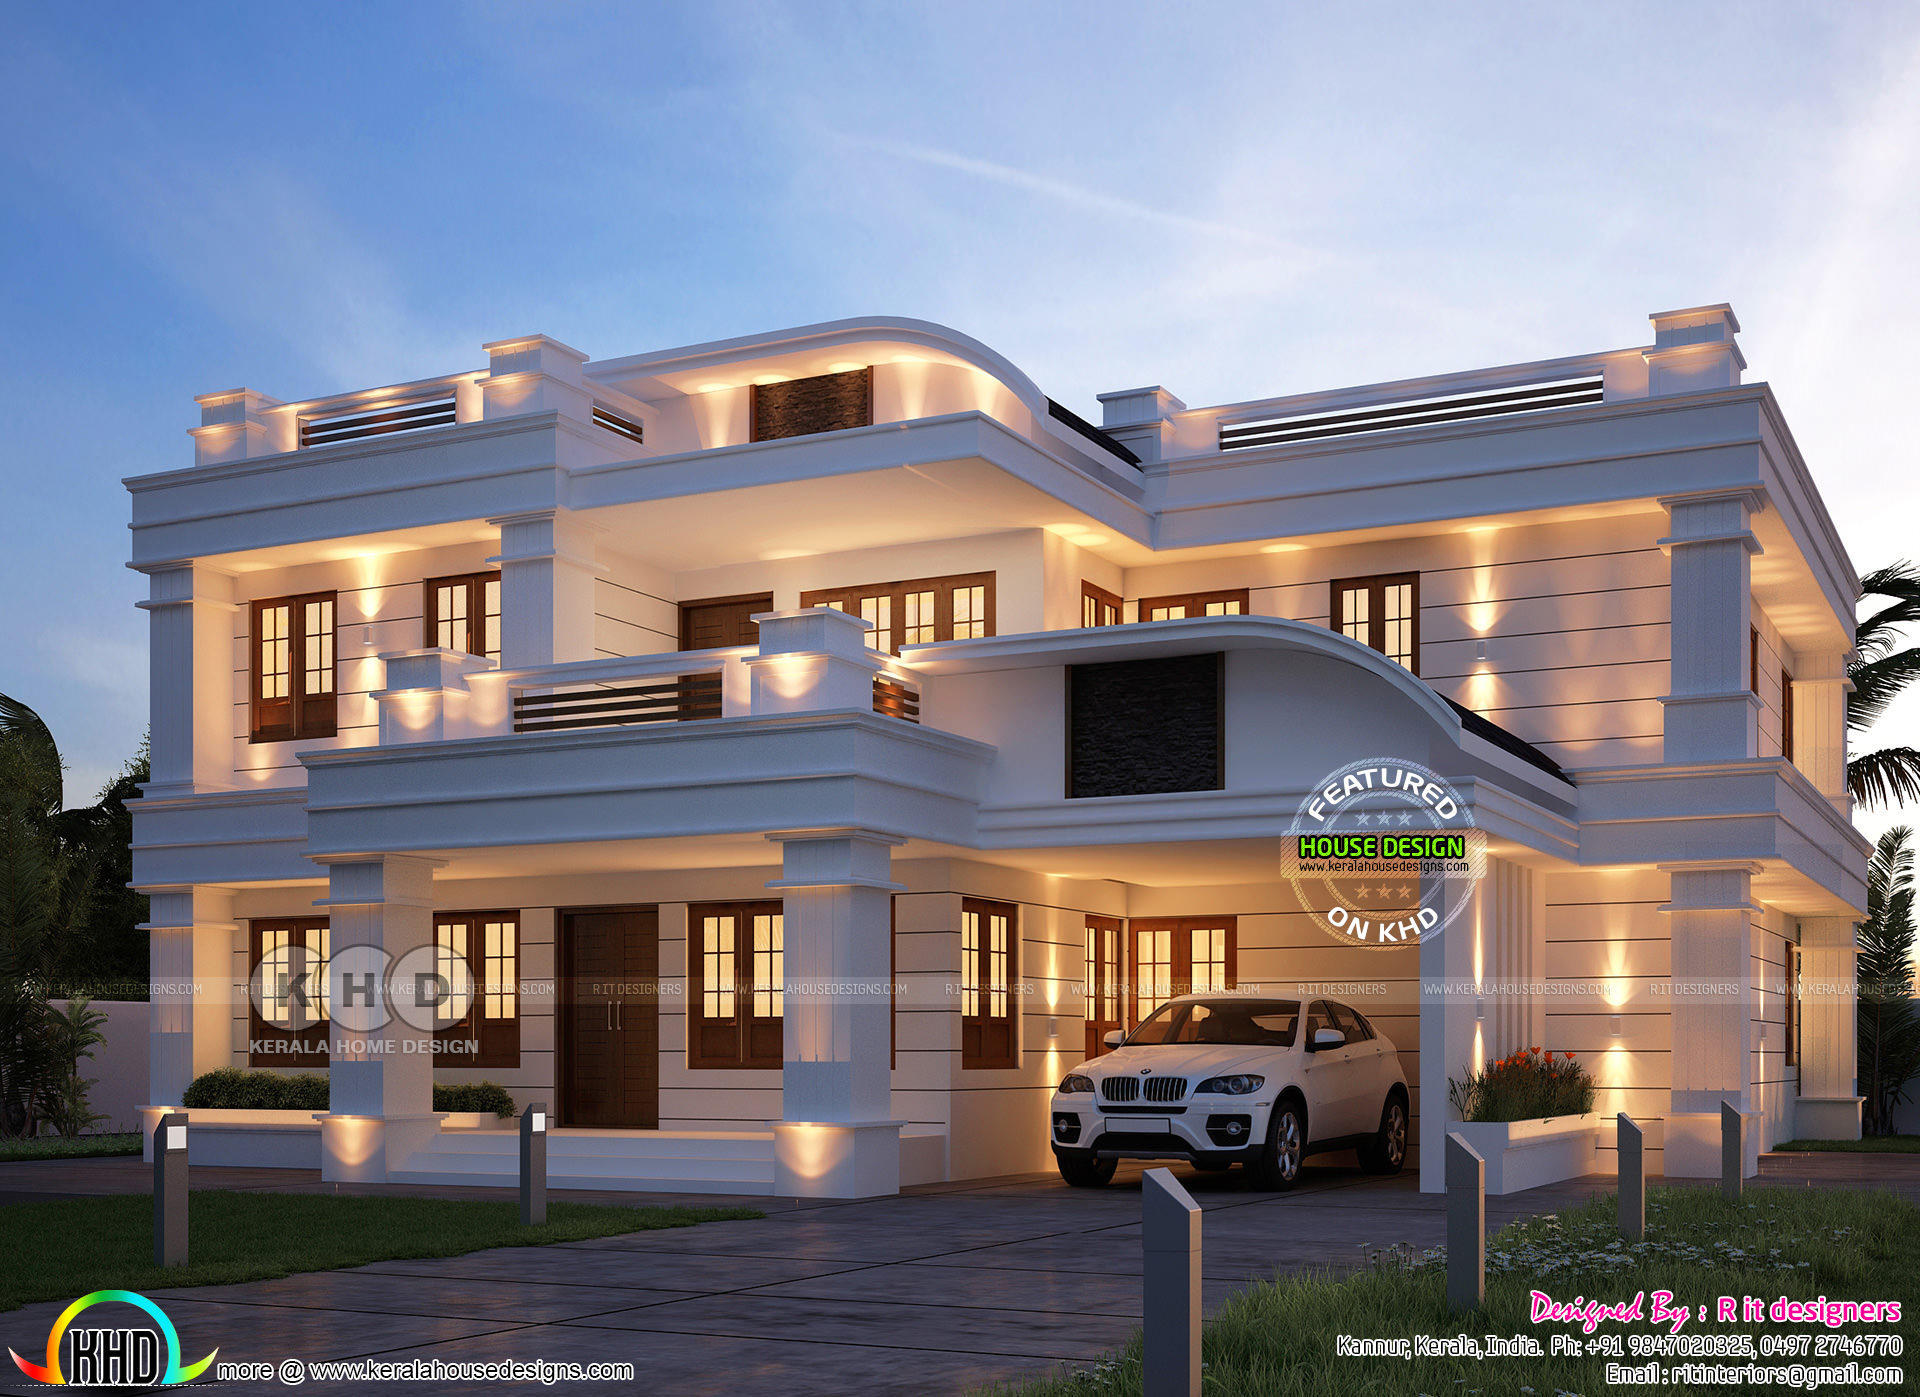  5  bedroom  grand and stylish Kerala  home  design  Kerala  